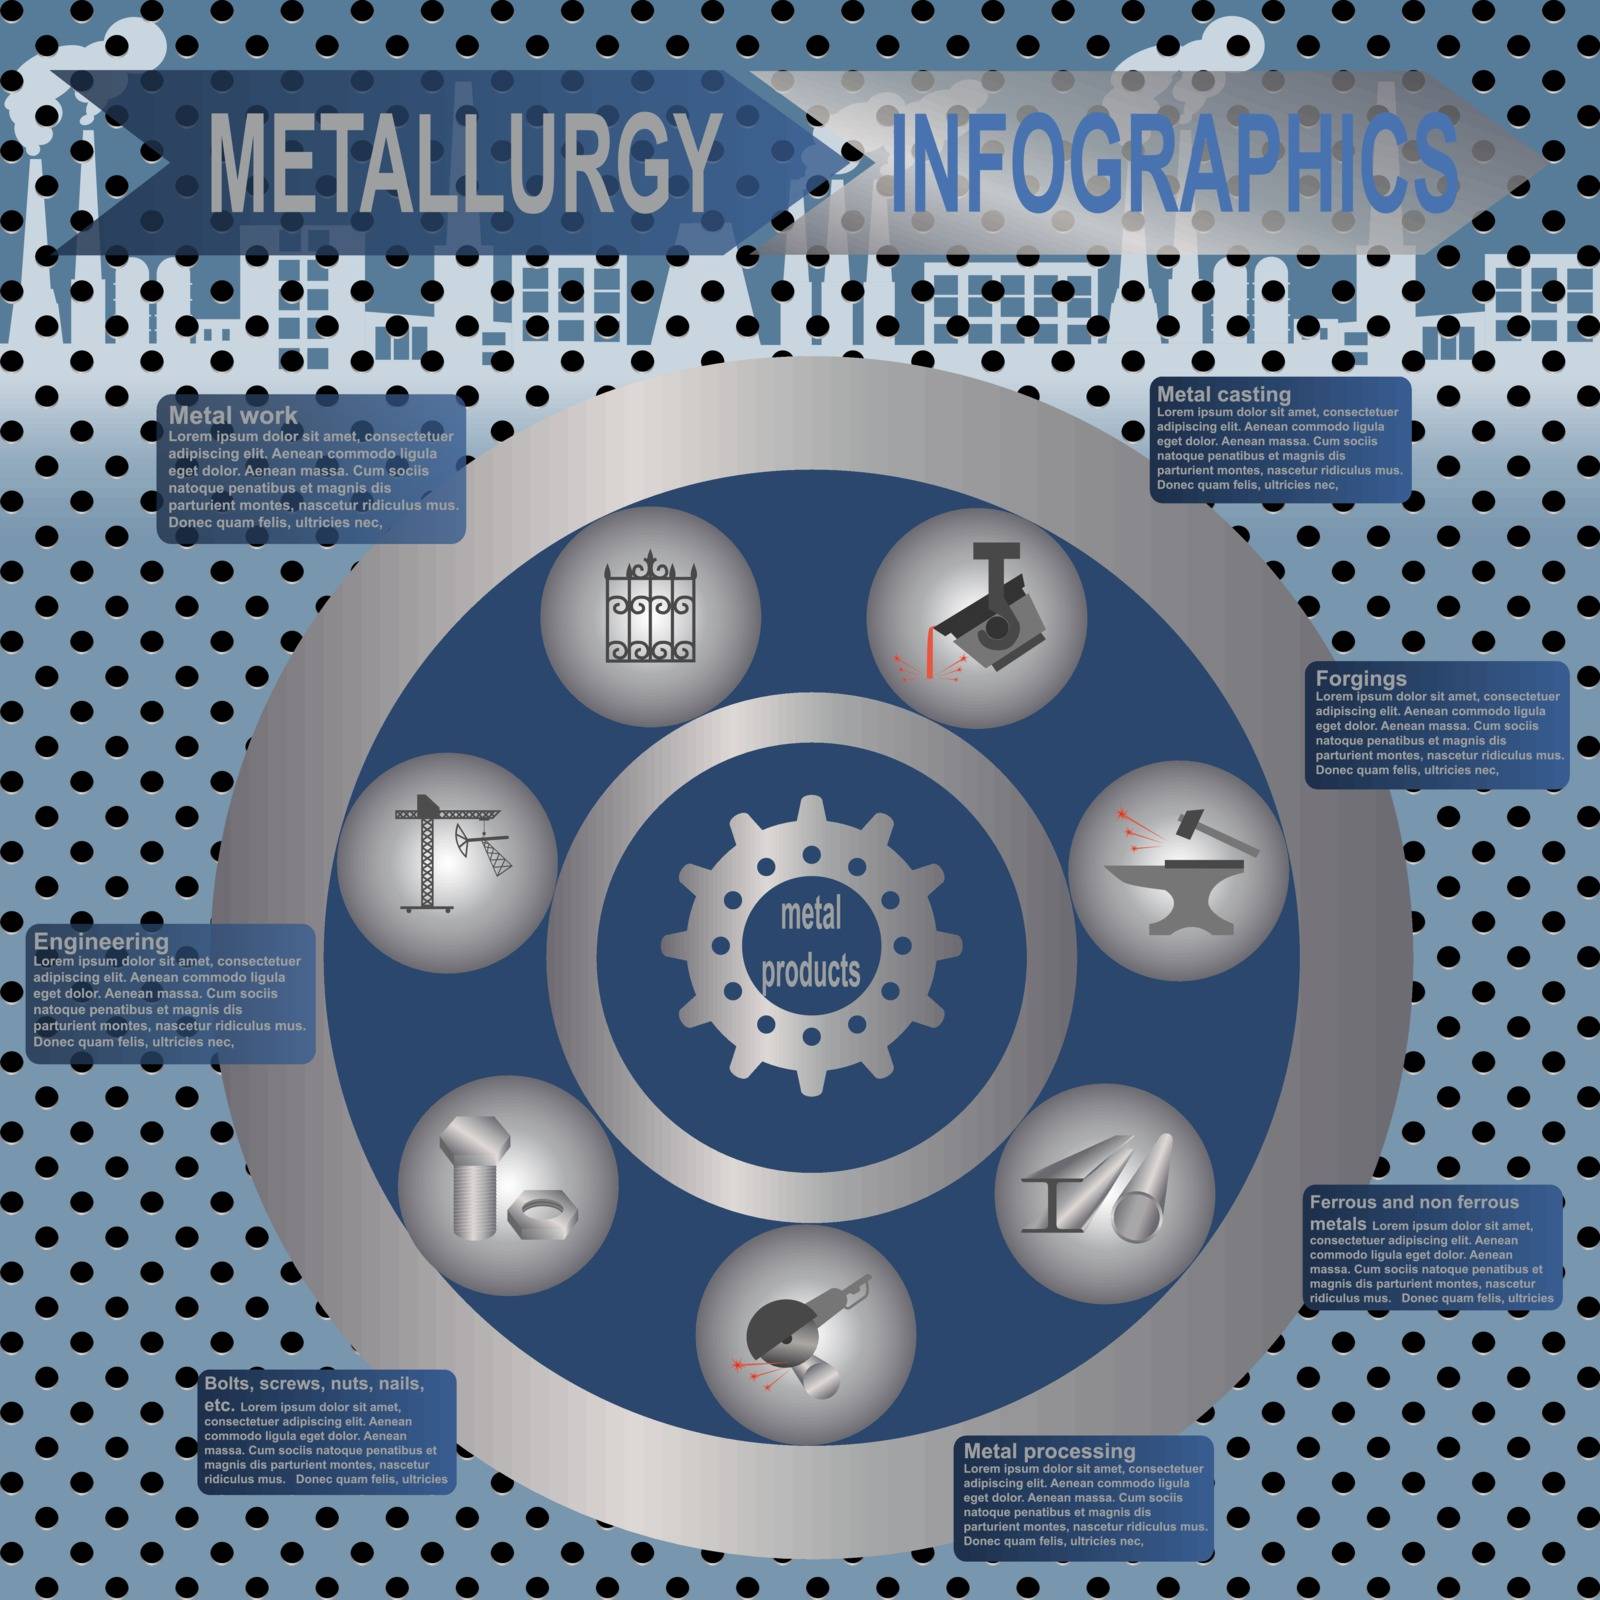 Metallurgical industry info graphics. Vector illustration